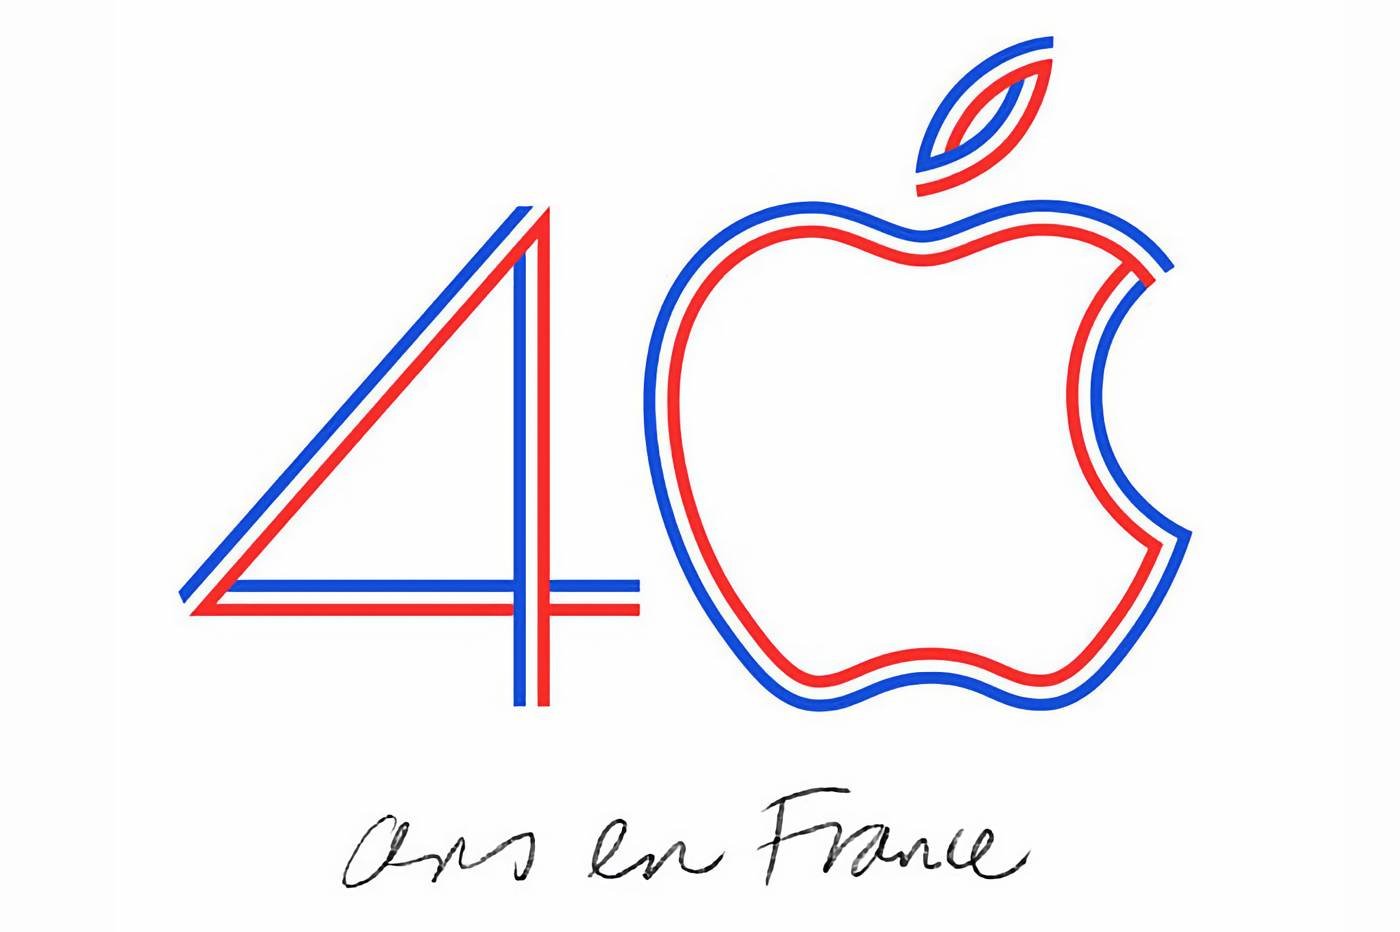 40 ans Apple en France